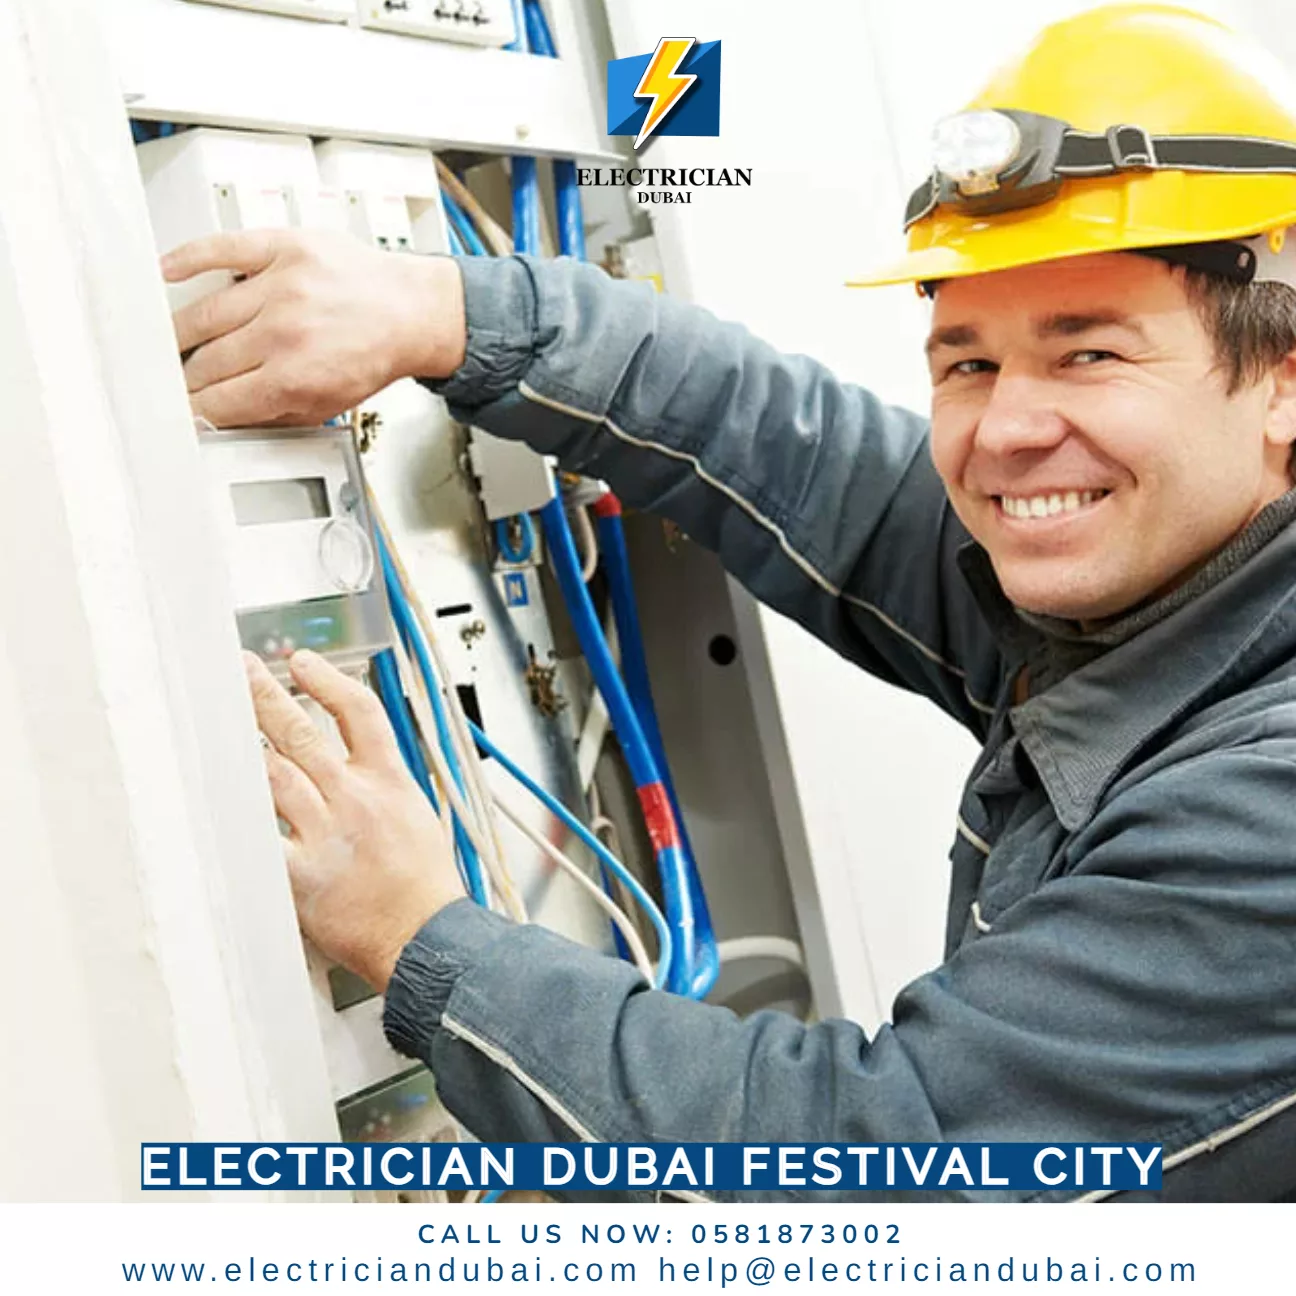 Electrician Dubai Festival City